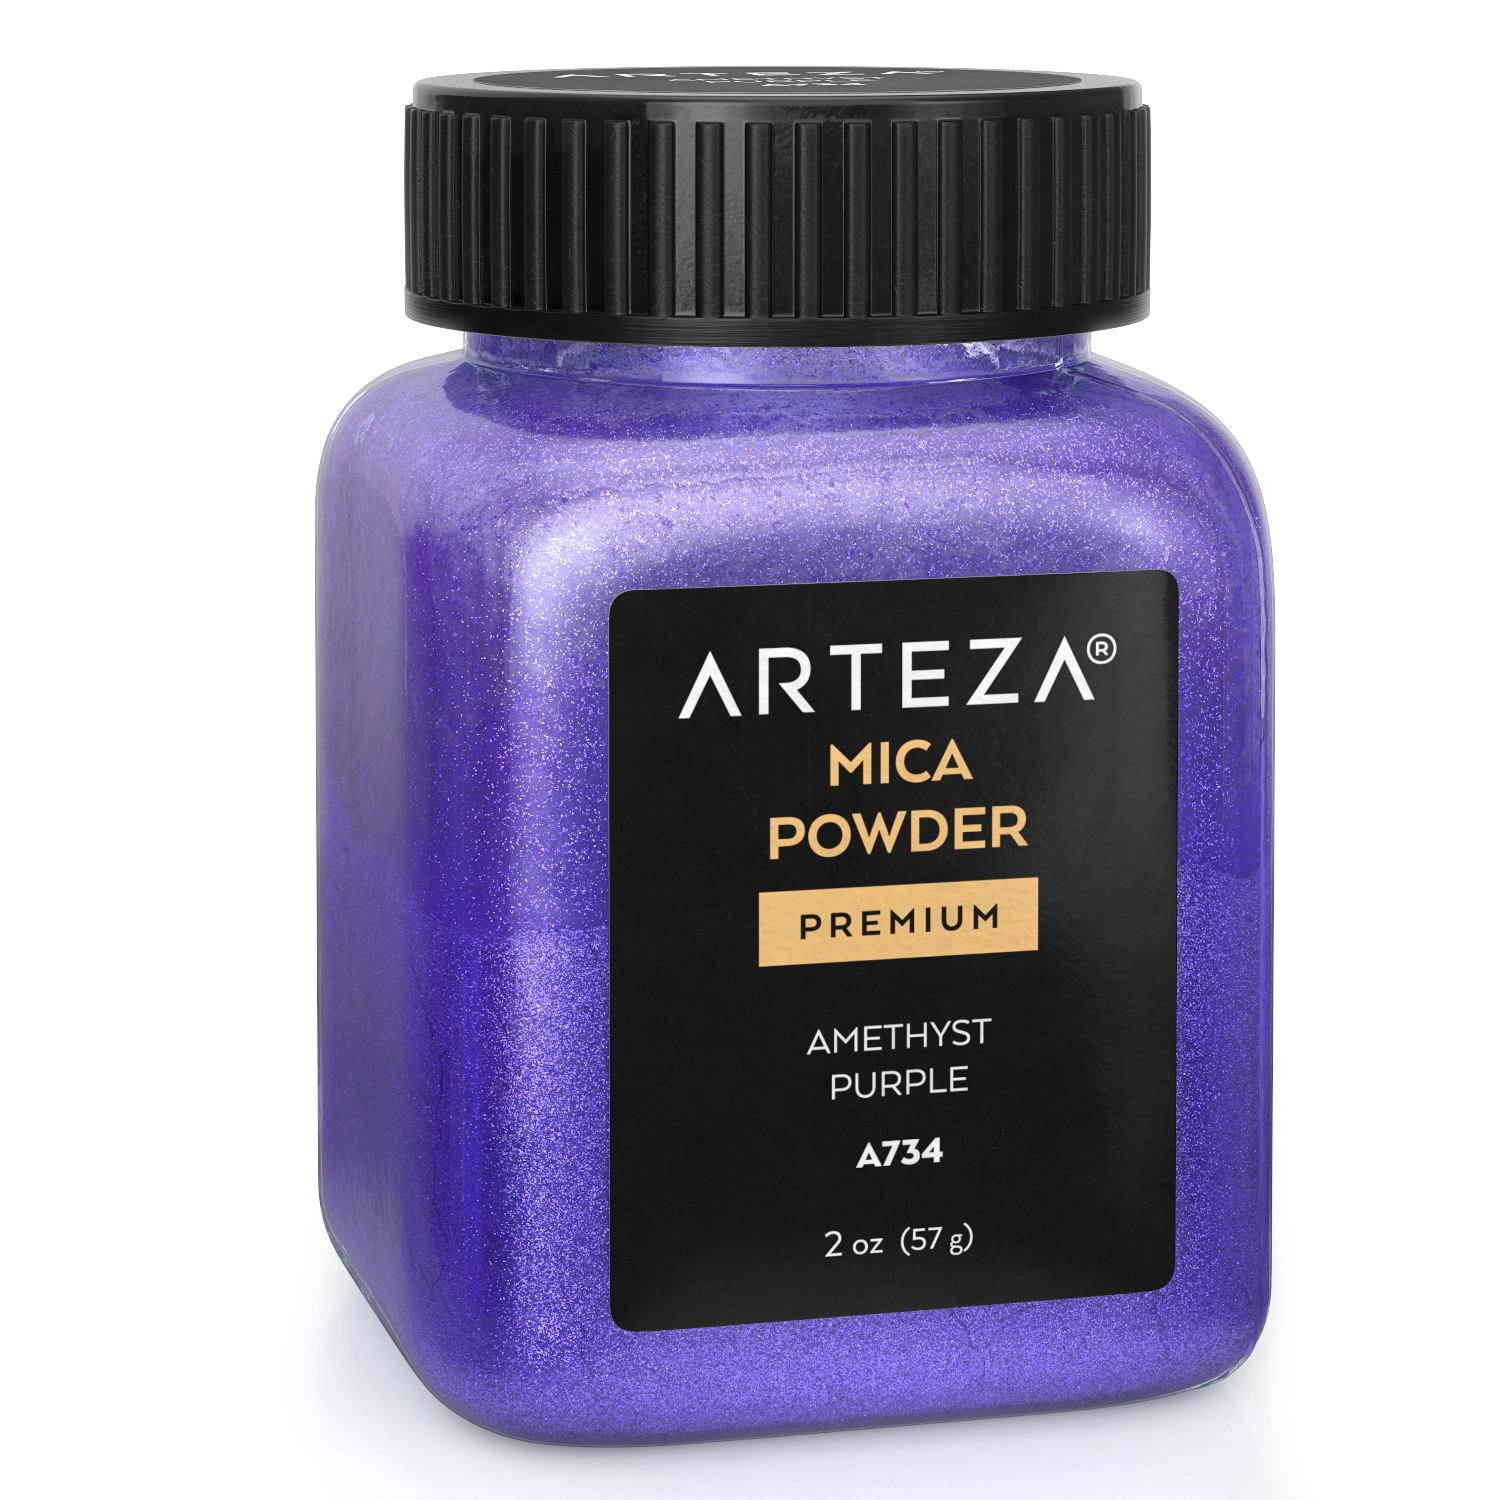 Arteza Mica Powder, 0.18 oz (5G) Small Bottles - Set of 60